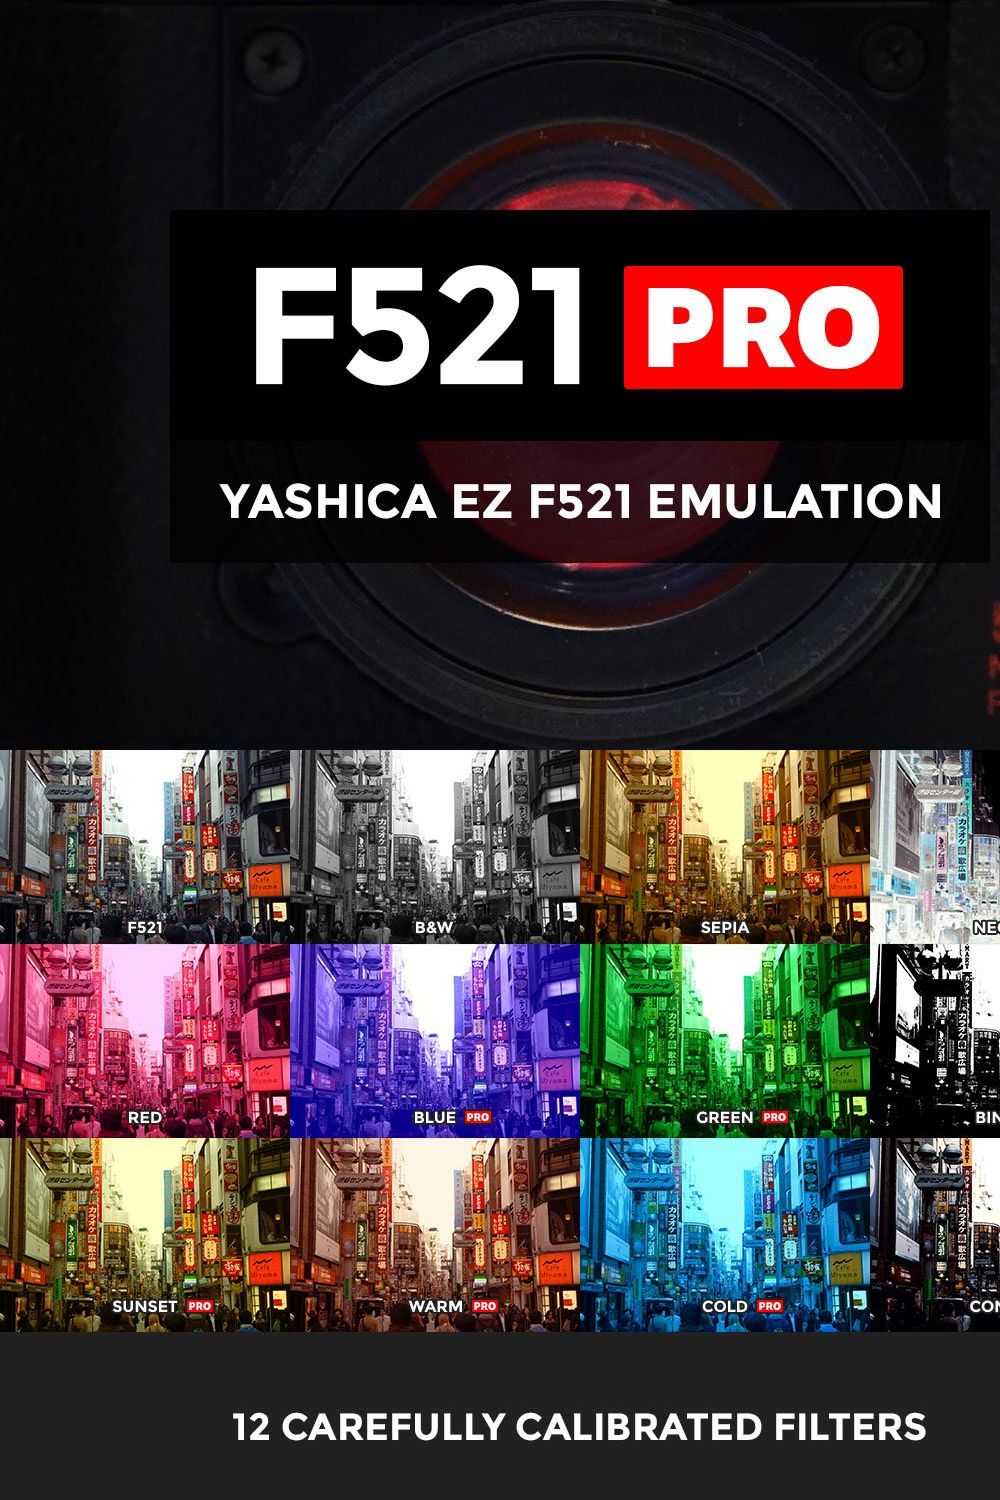 Yashica EZ F521 Emulation [PRO] pinterest preview image.